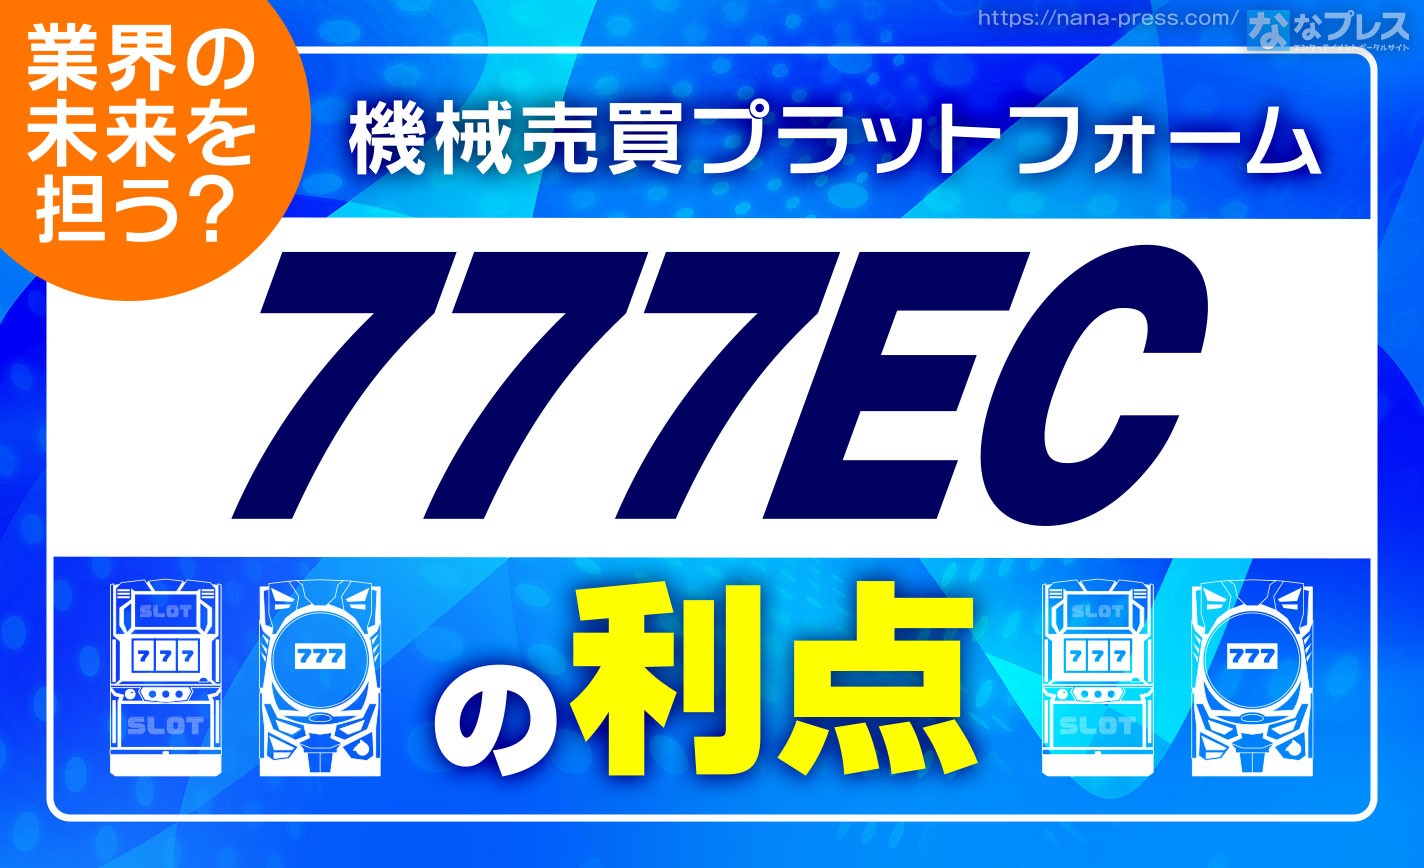 【777EC】エンターライズも参画！サミーネットワークスが生んだ機械売買プラットフォームについてざっくり解説 eyecatch-image